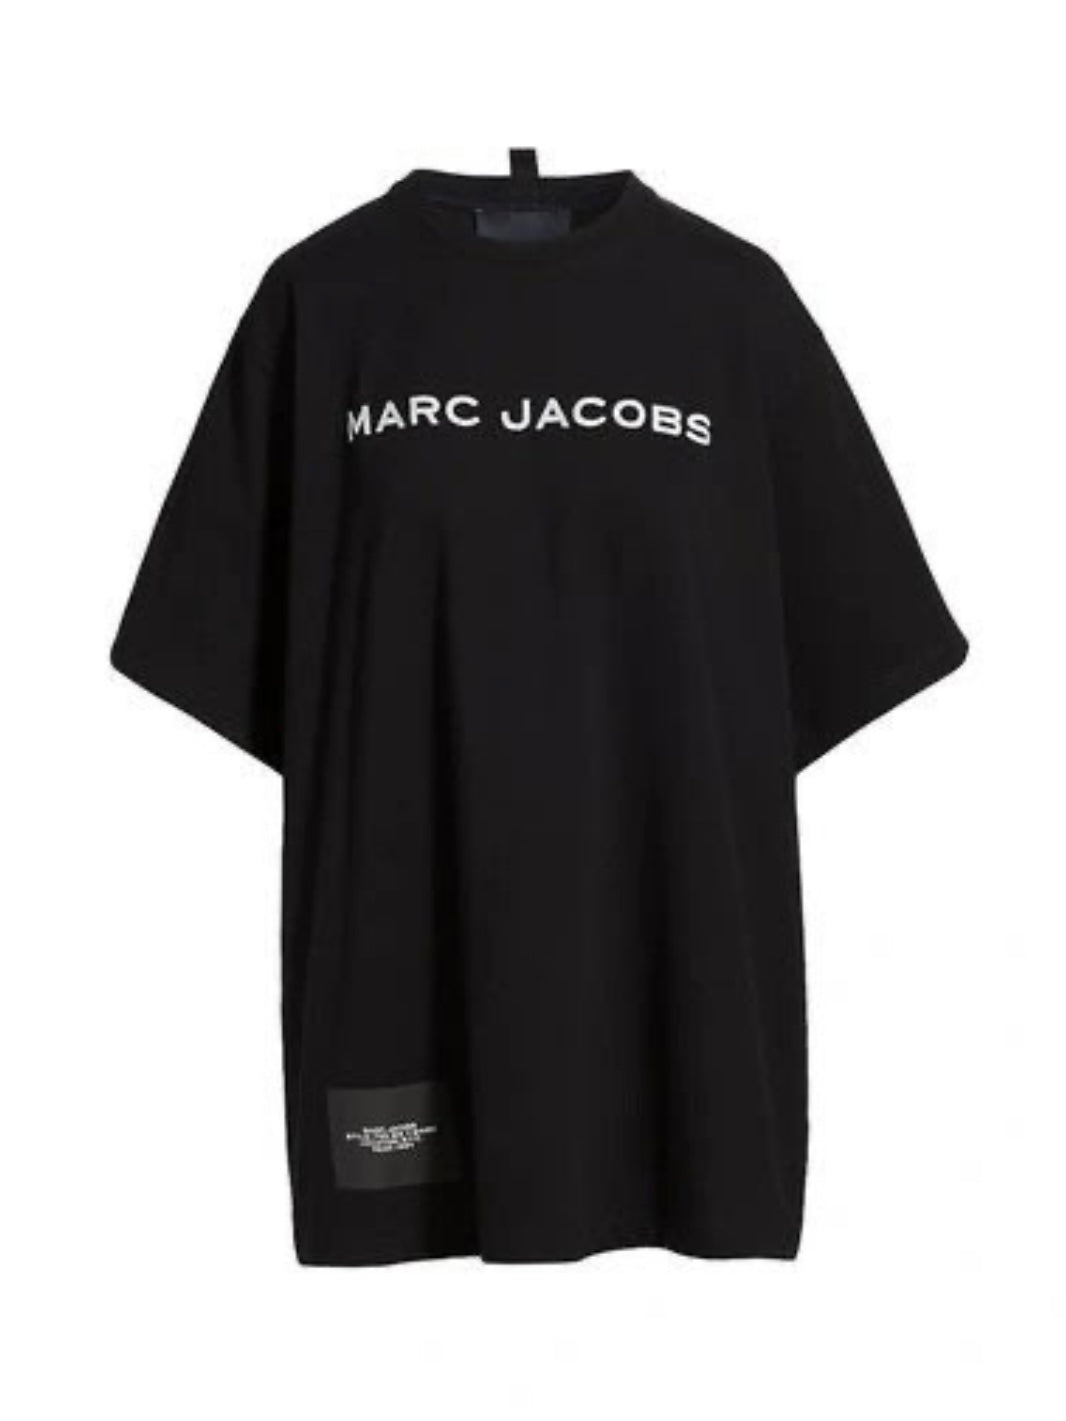 MARC JACOBS The Big T-Shirt Oversized, Black, 1 SIZE